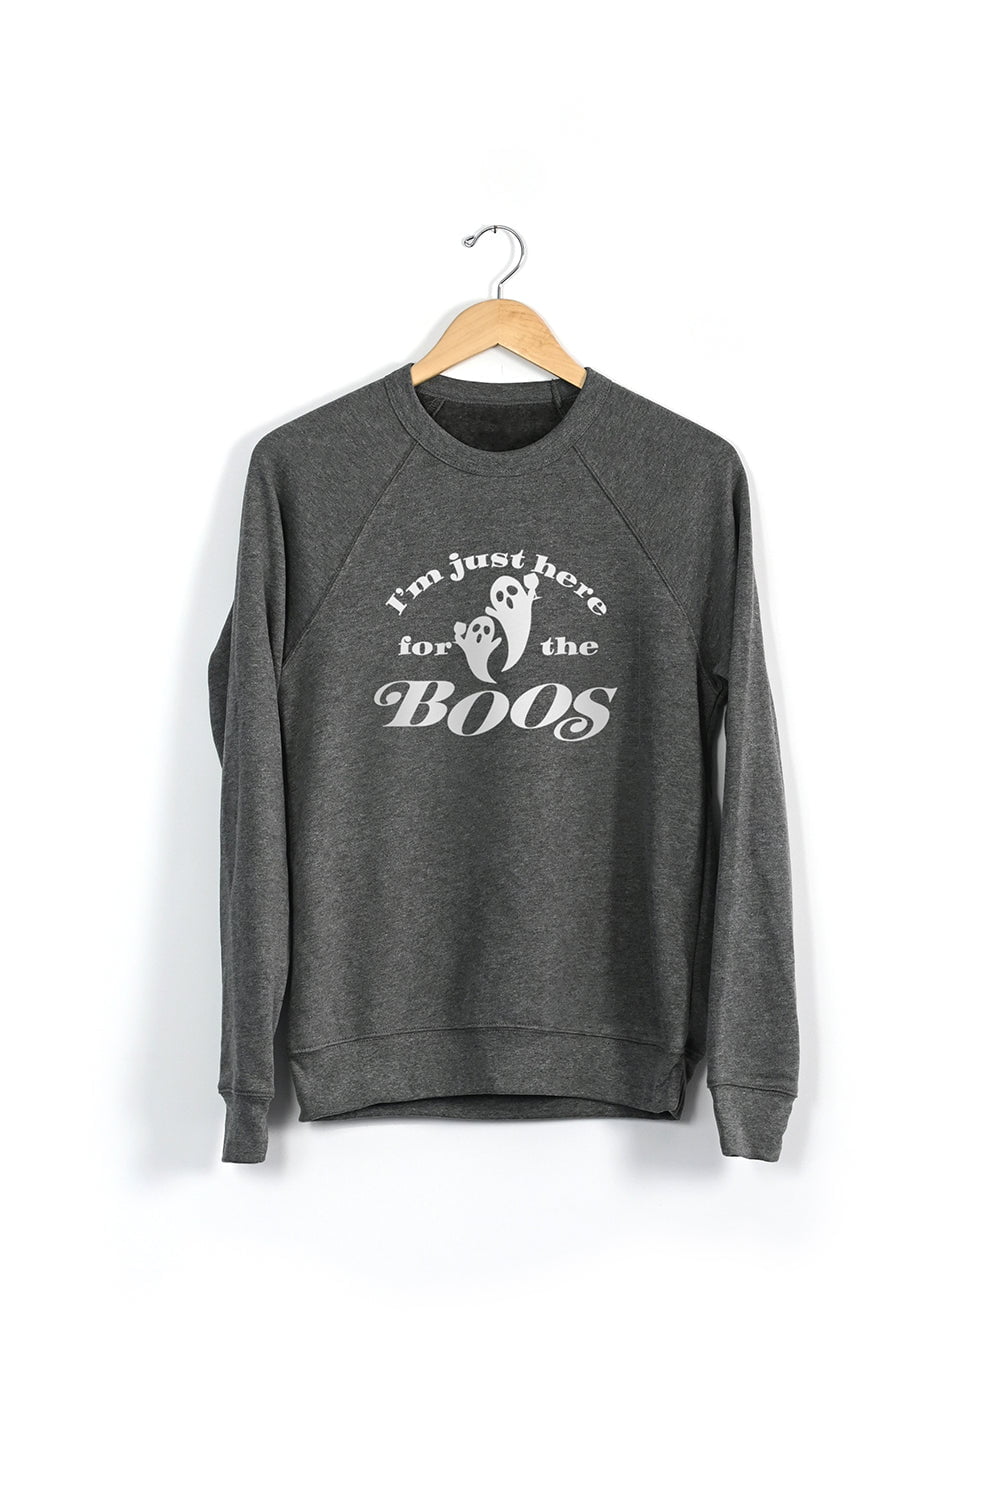 Sarah Marie Design Studio Sweatshirt Here for the Boos Sweatshirt